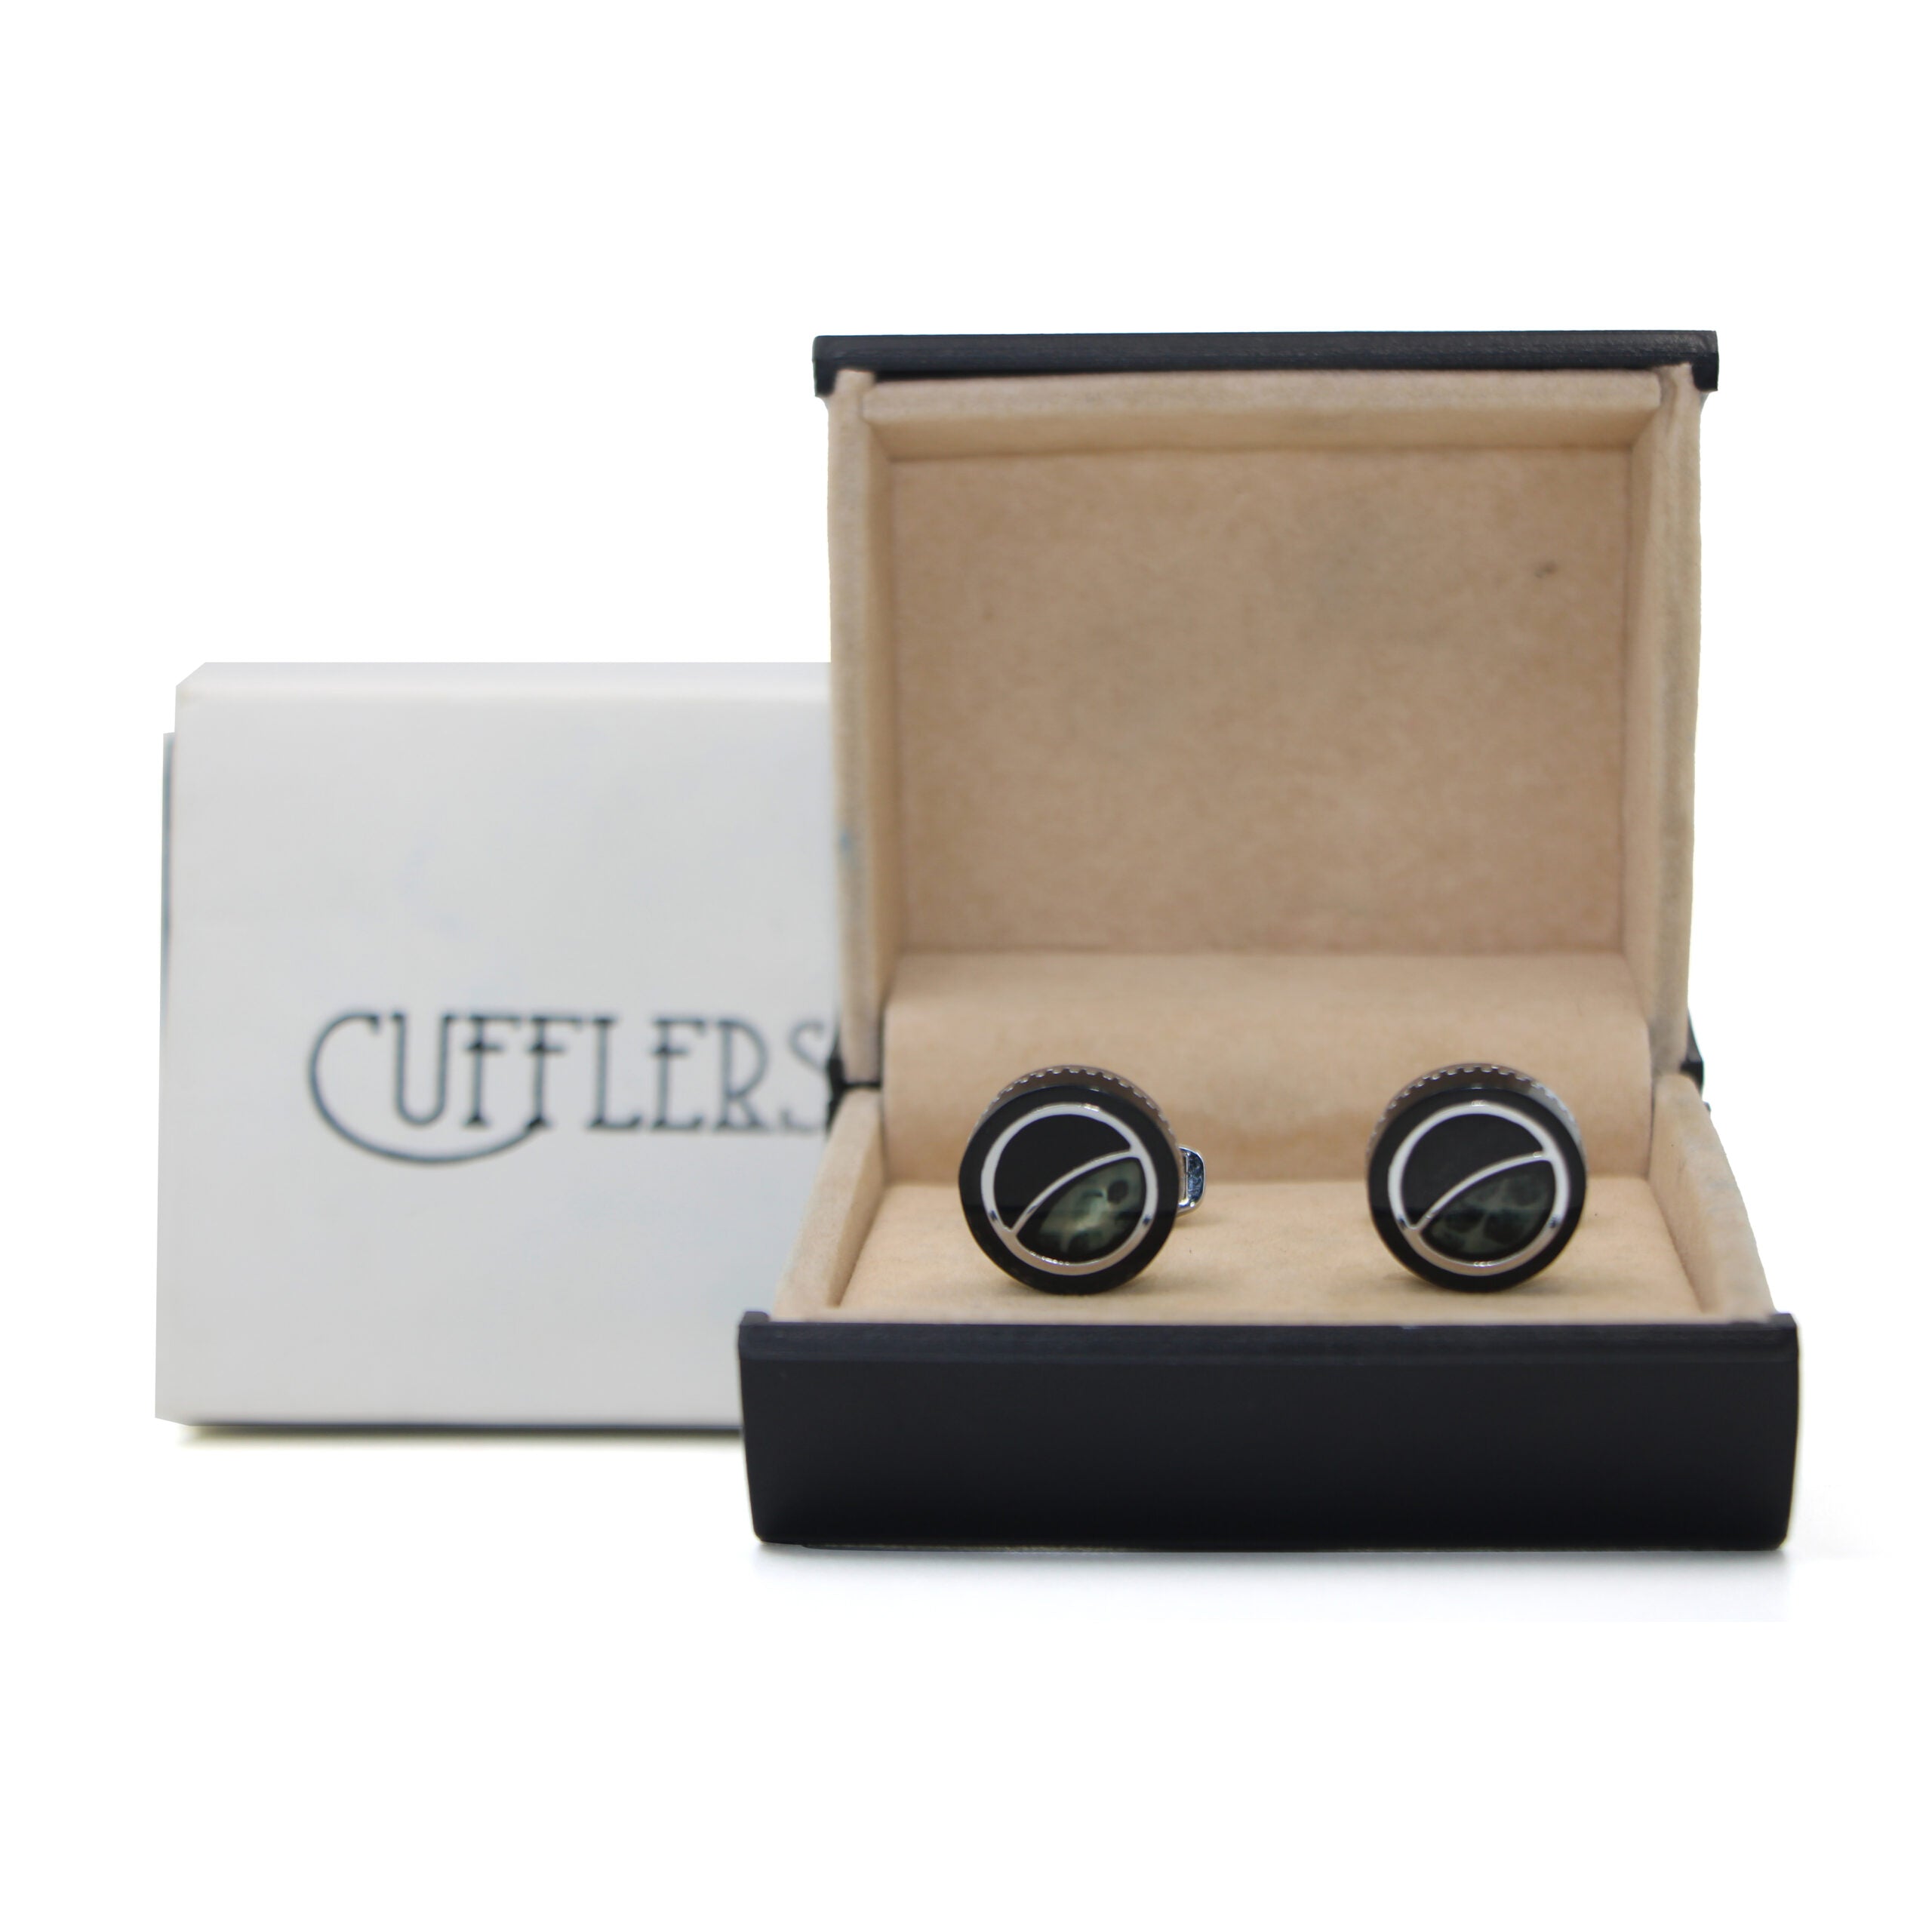 Cufflers Vintage Black Round Cufflinks with Free Gift Box